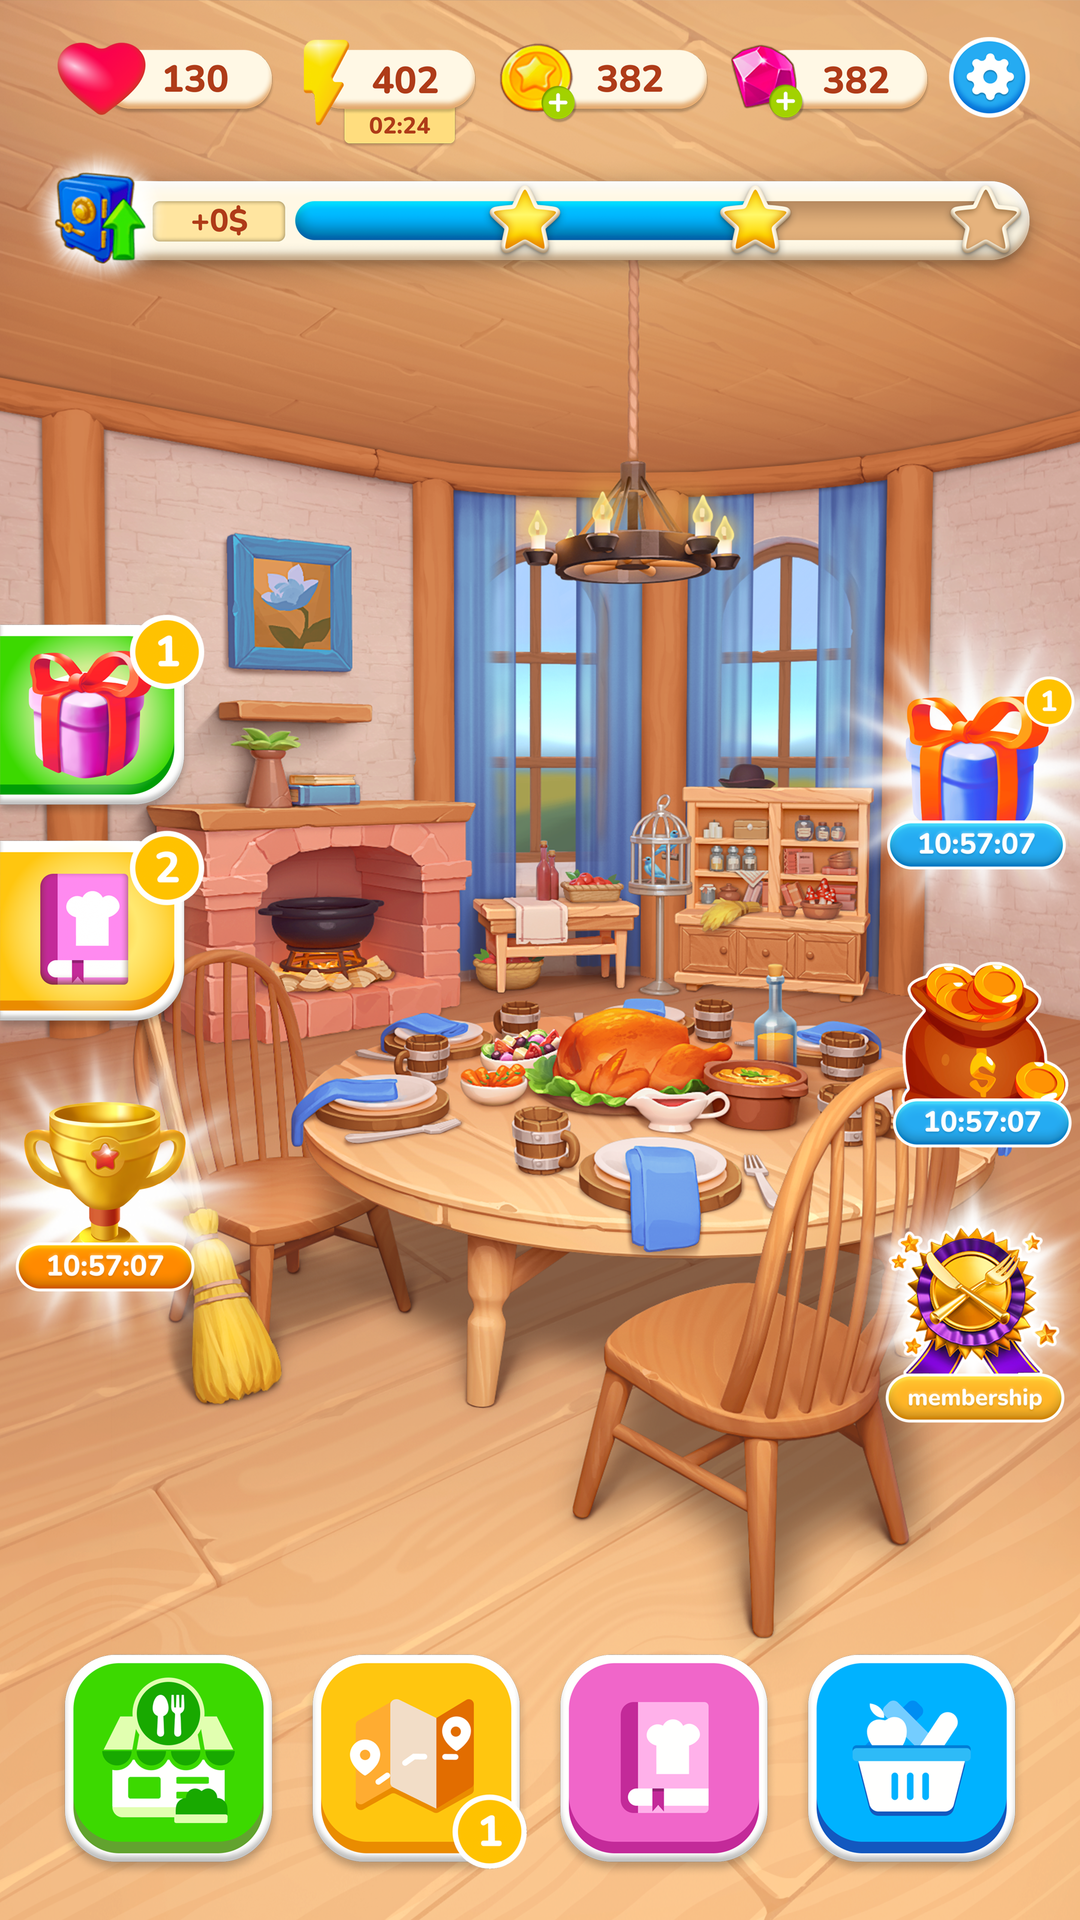 Merge Meal: 맛있는 카페 이야기 게임 스크린 샷